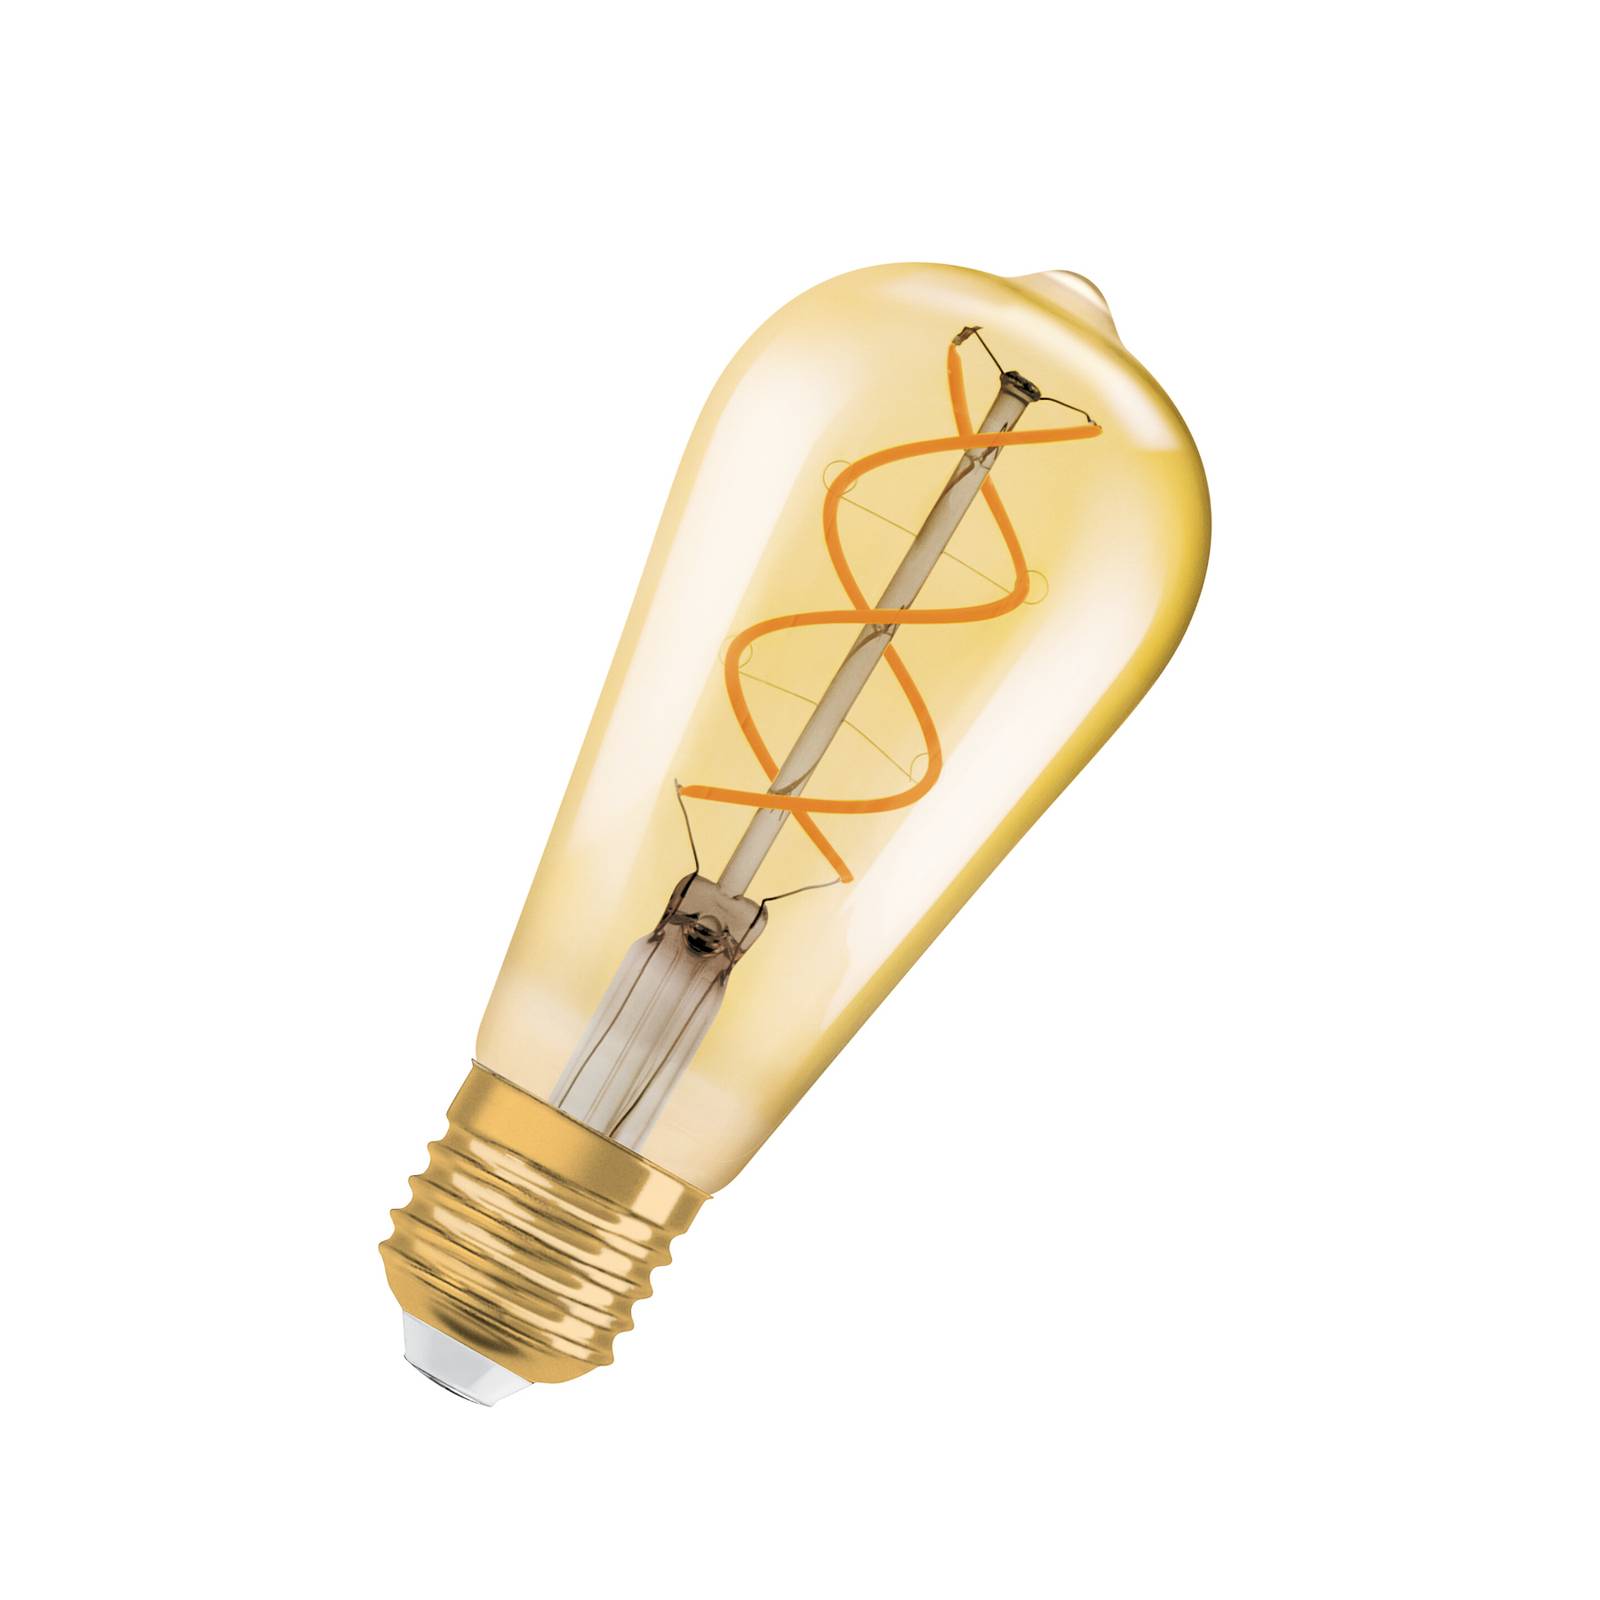 Фото - Лампочка Osram LED Vintage 1906 Edison, złota, E27, 4 W, 2000 K, ściemniana. 